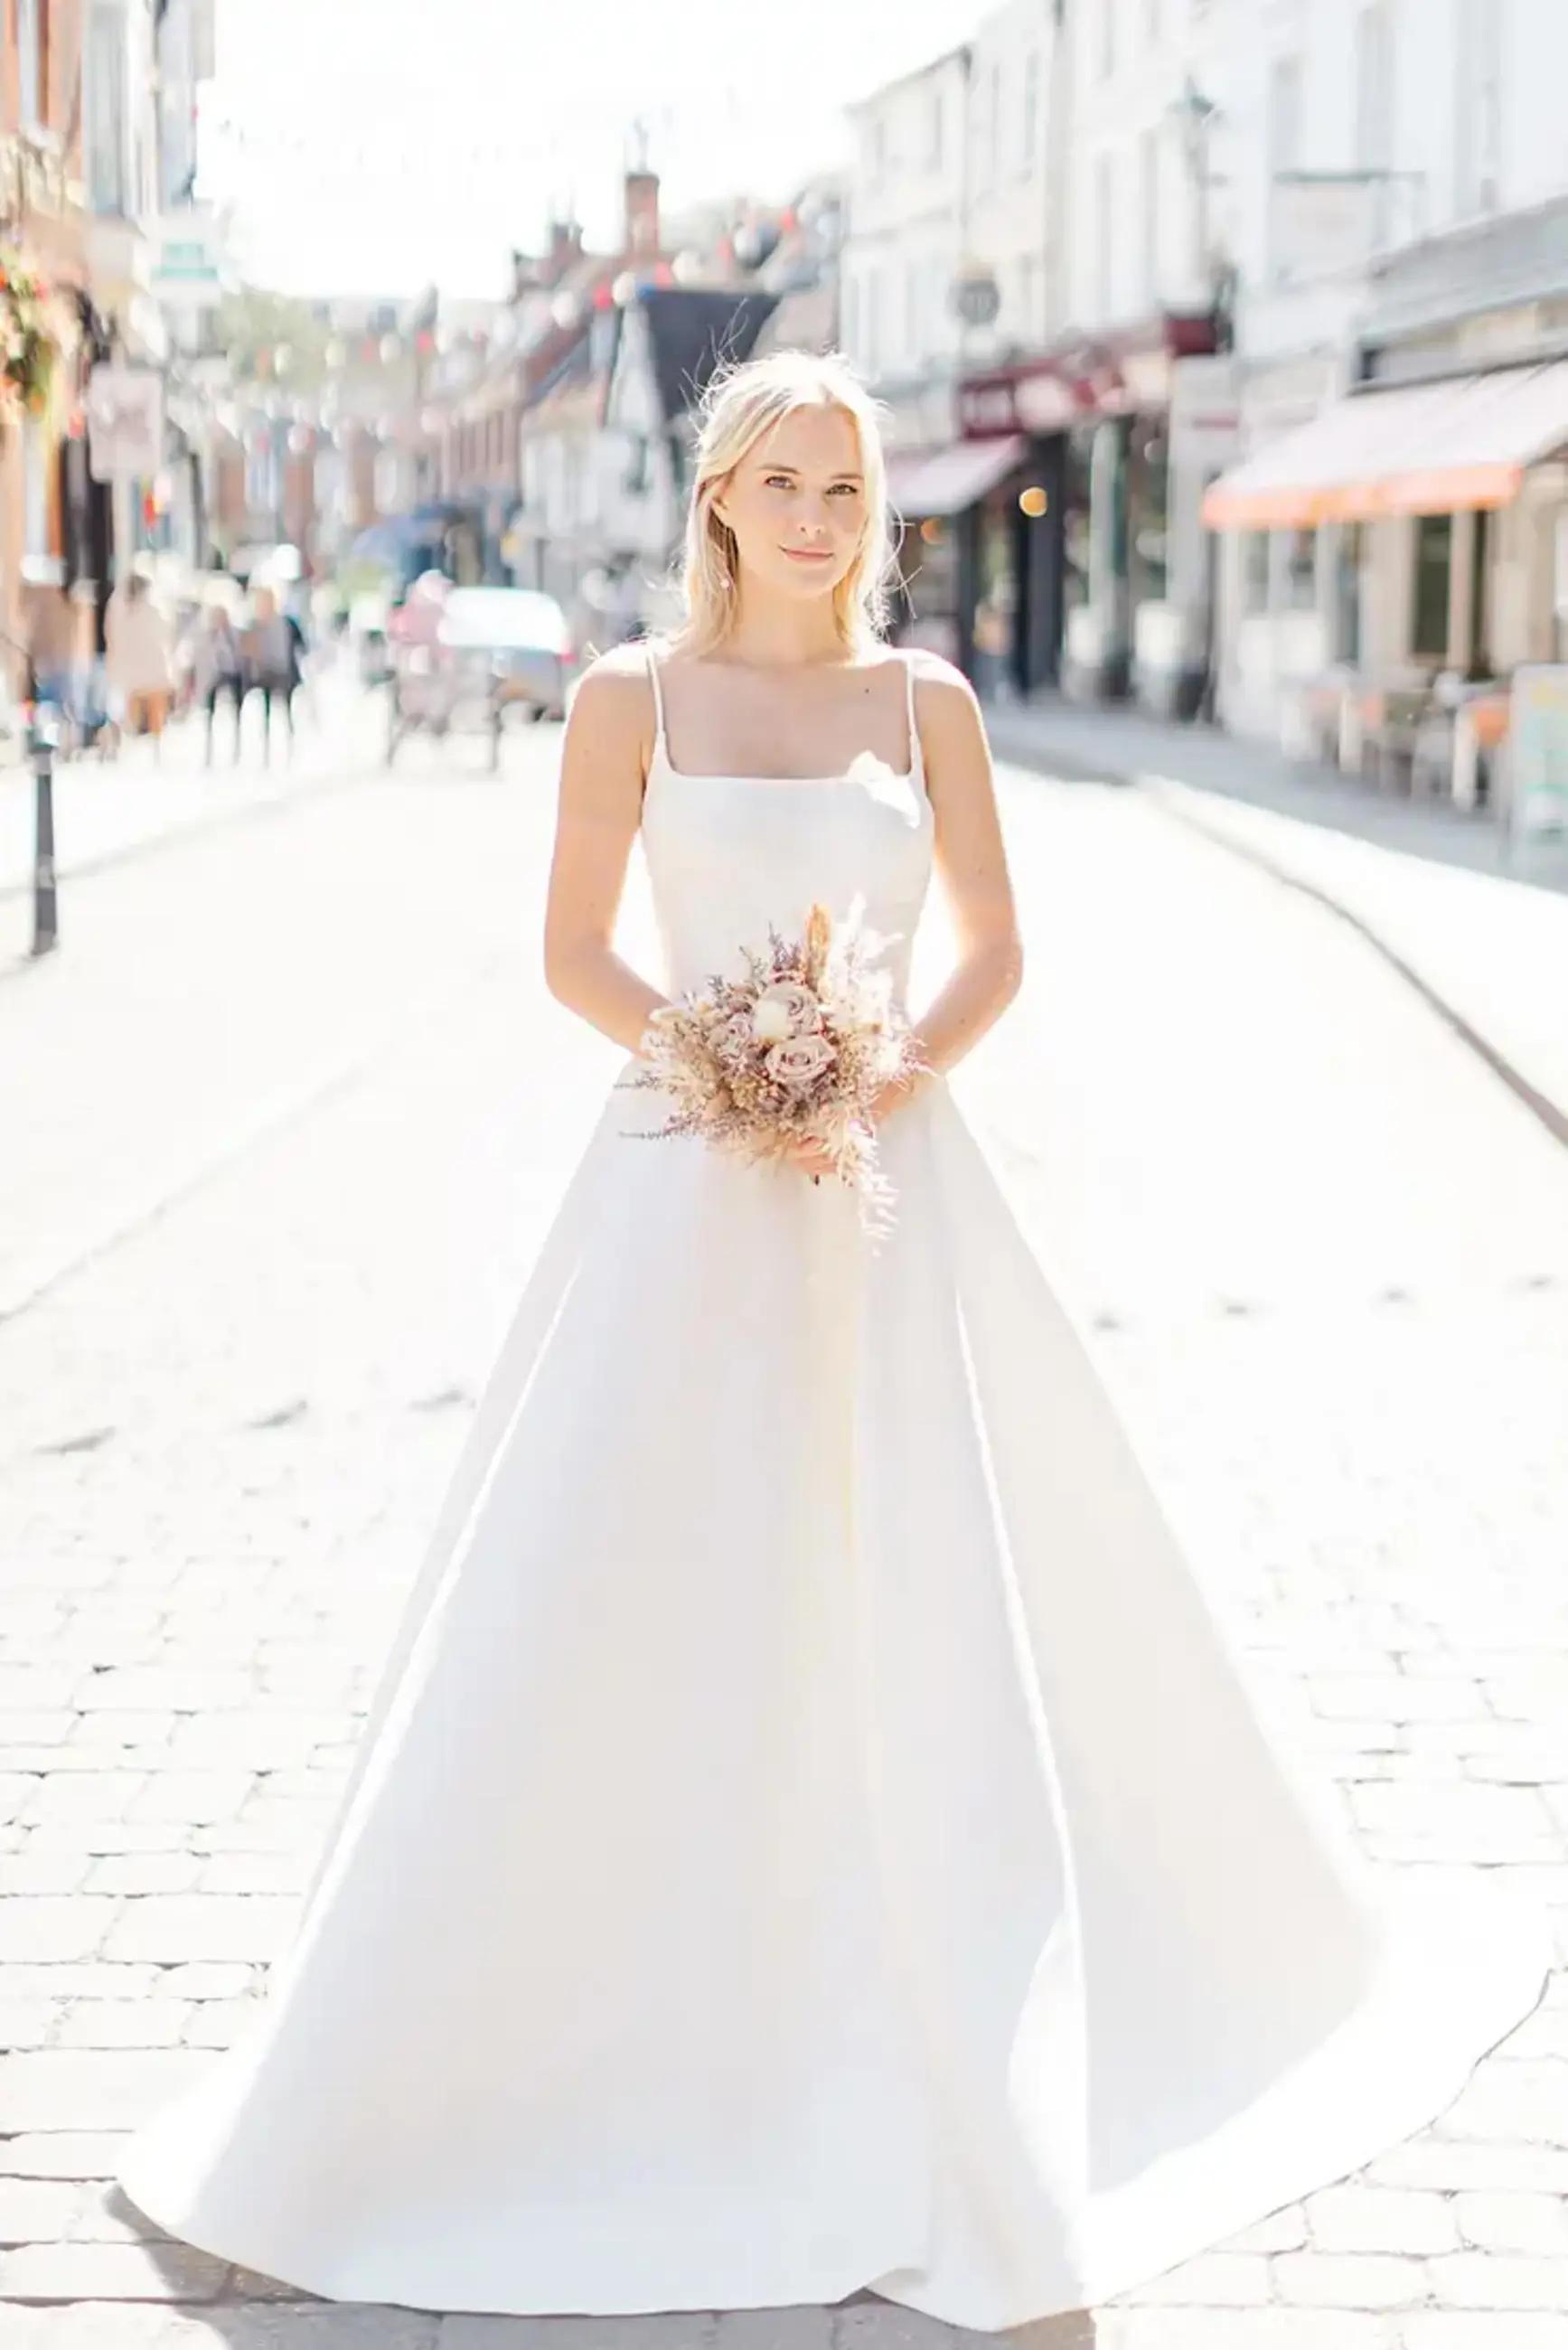 Morgan Davies Bridal Model wearing Freda Bennet Bridal dress